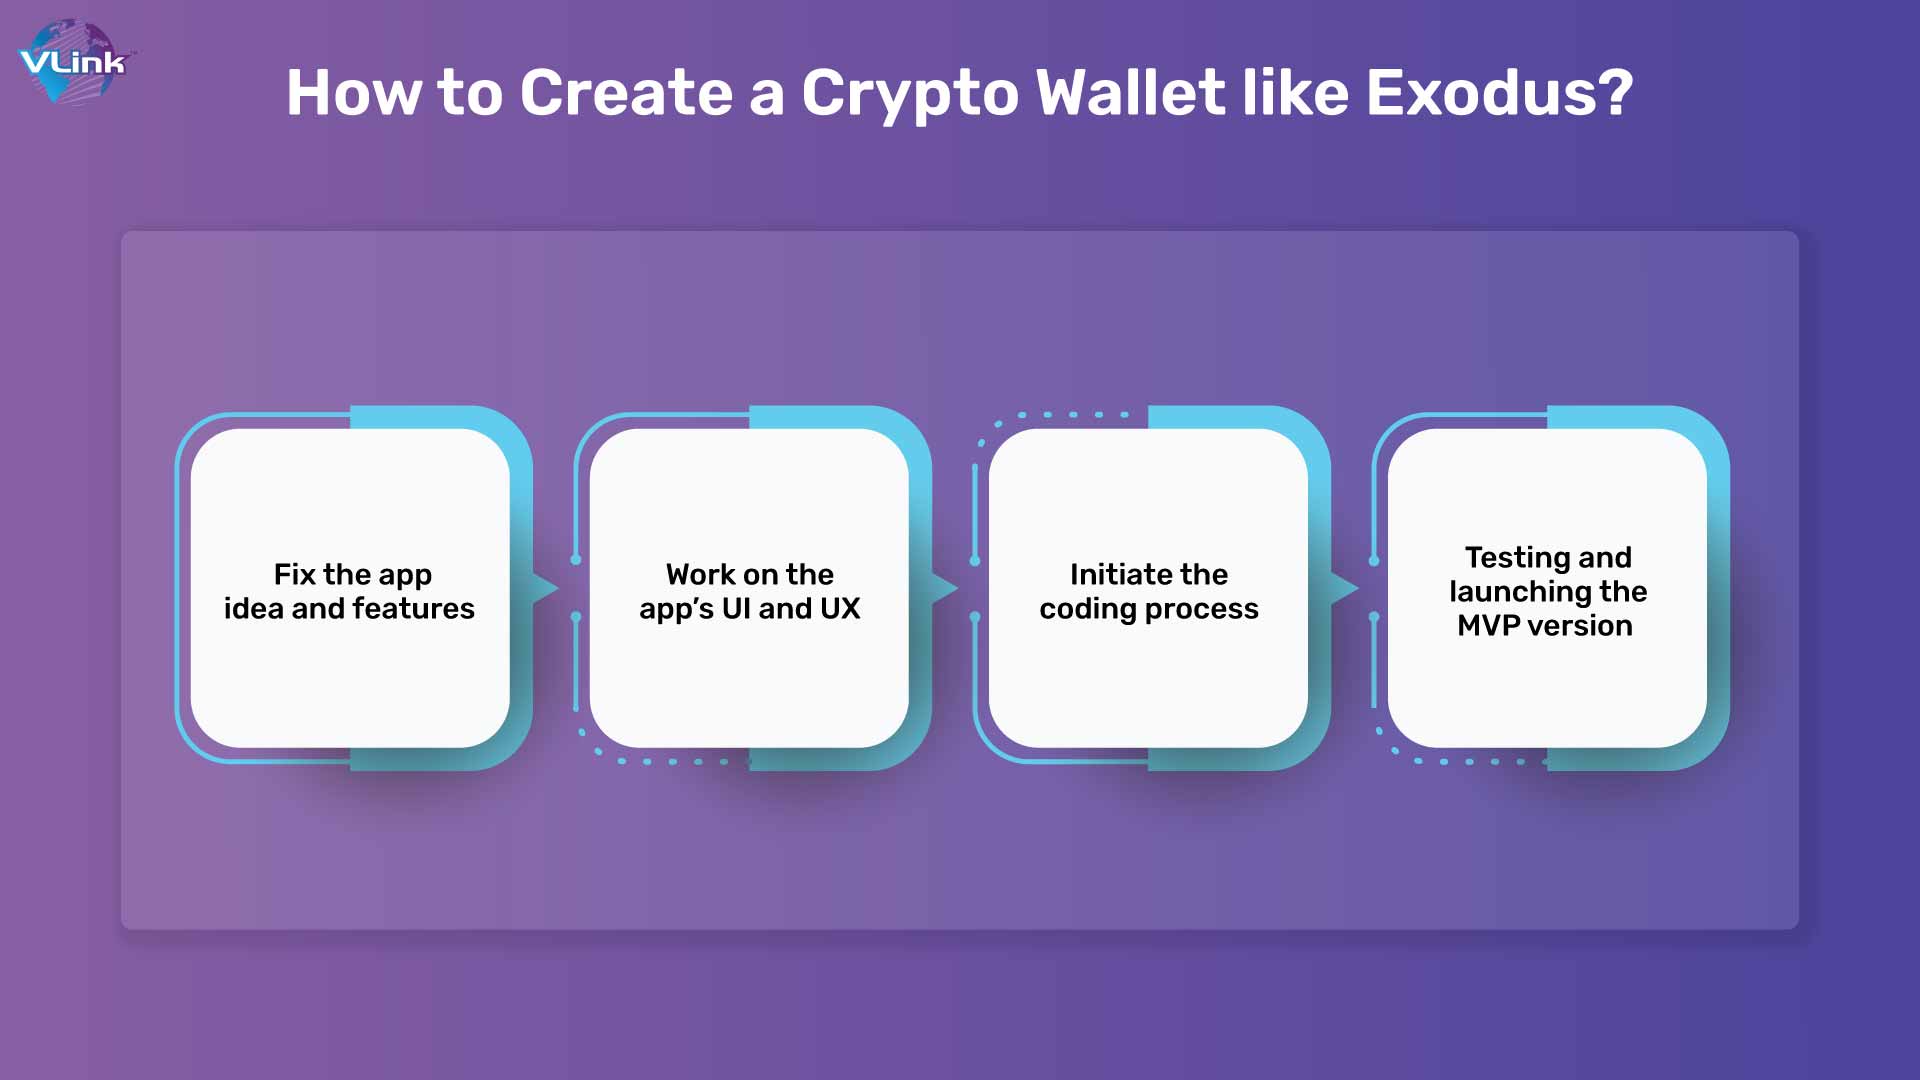 How Do you Create a Crypto Wallet like Exodus?